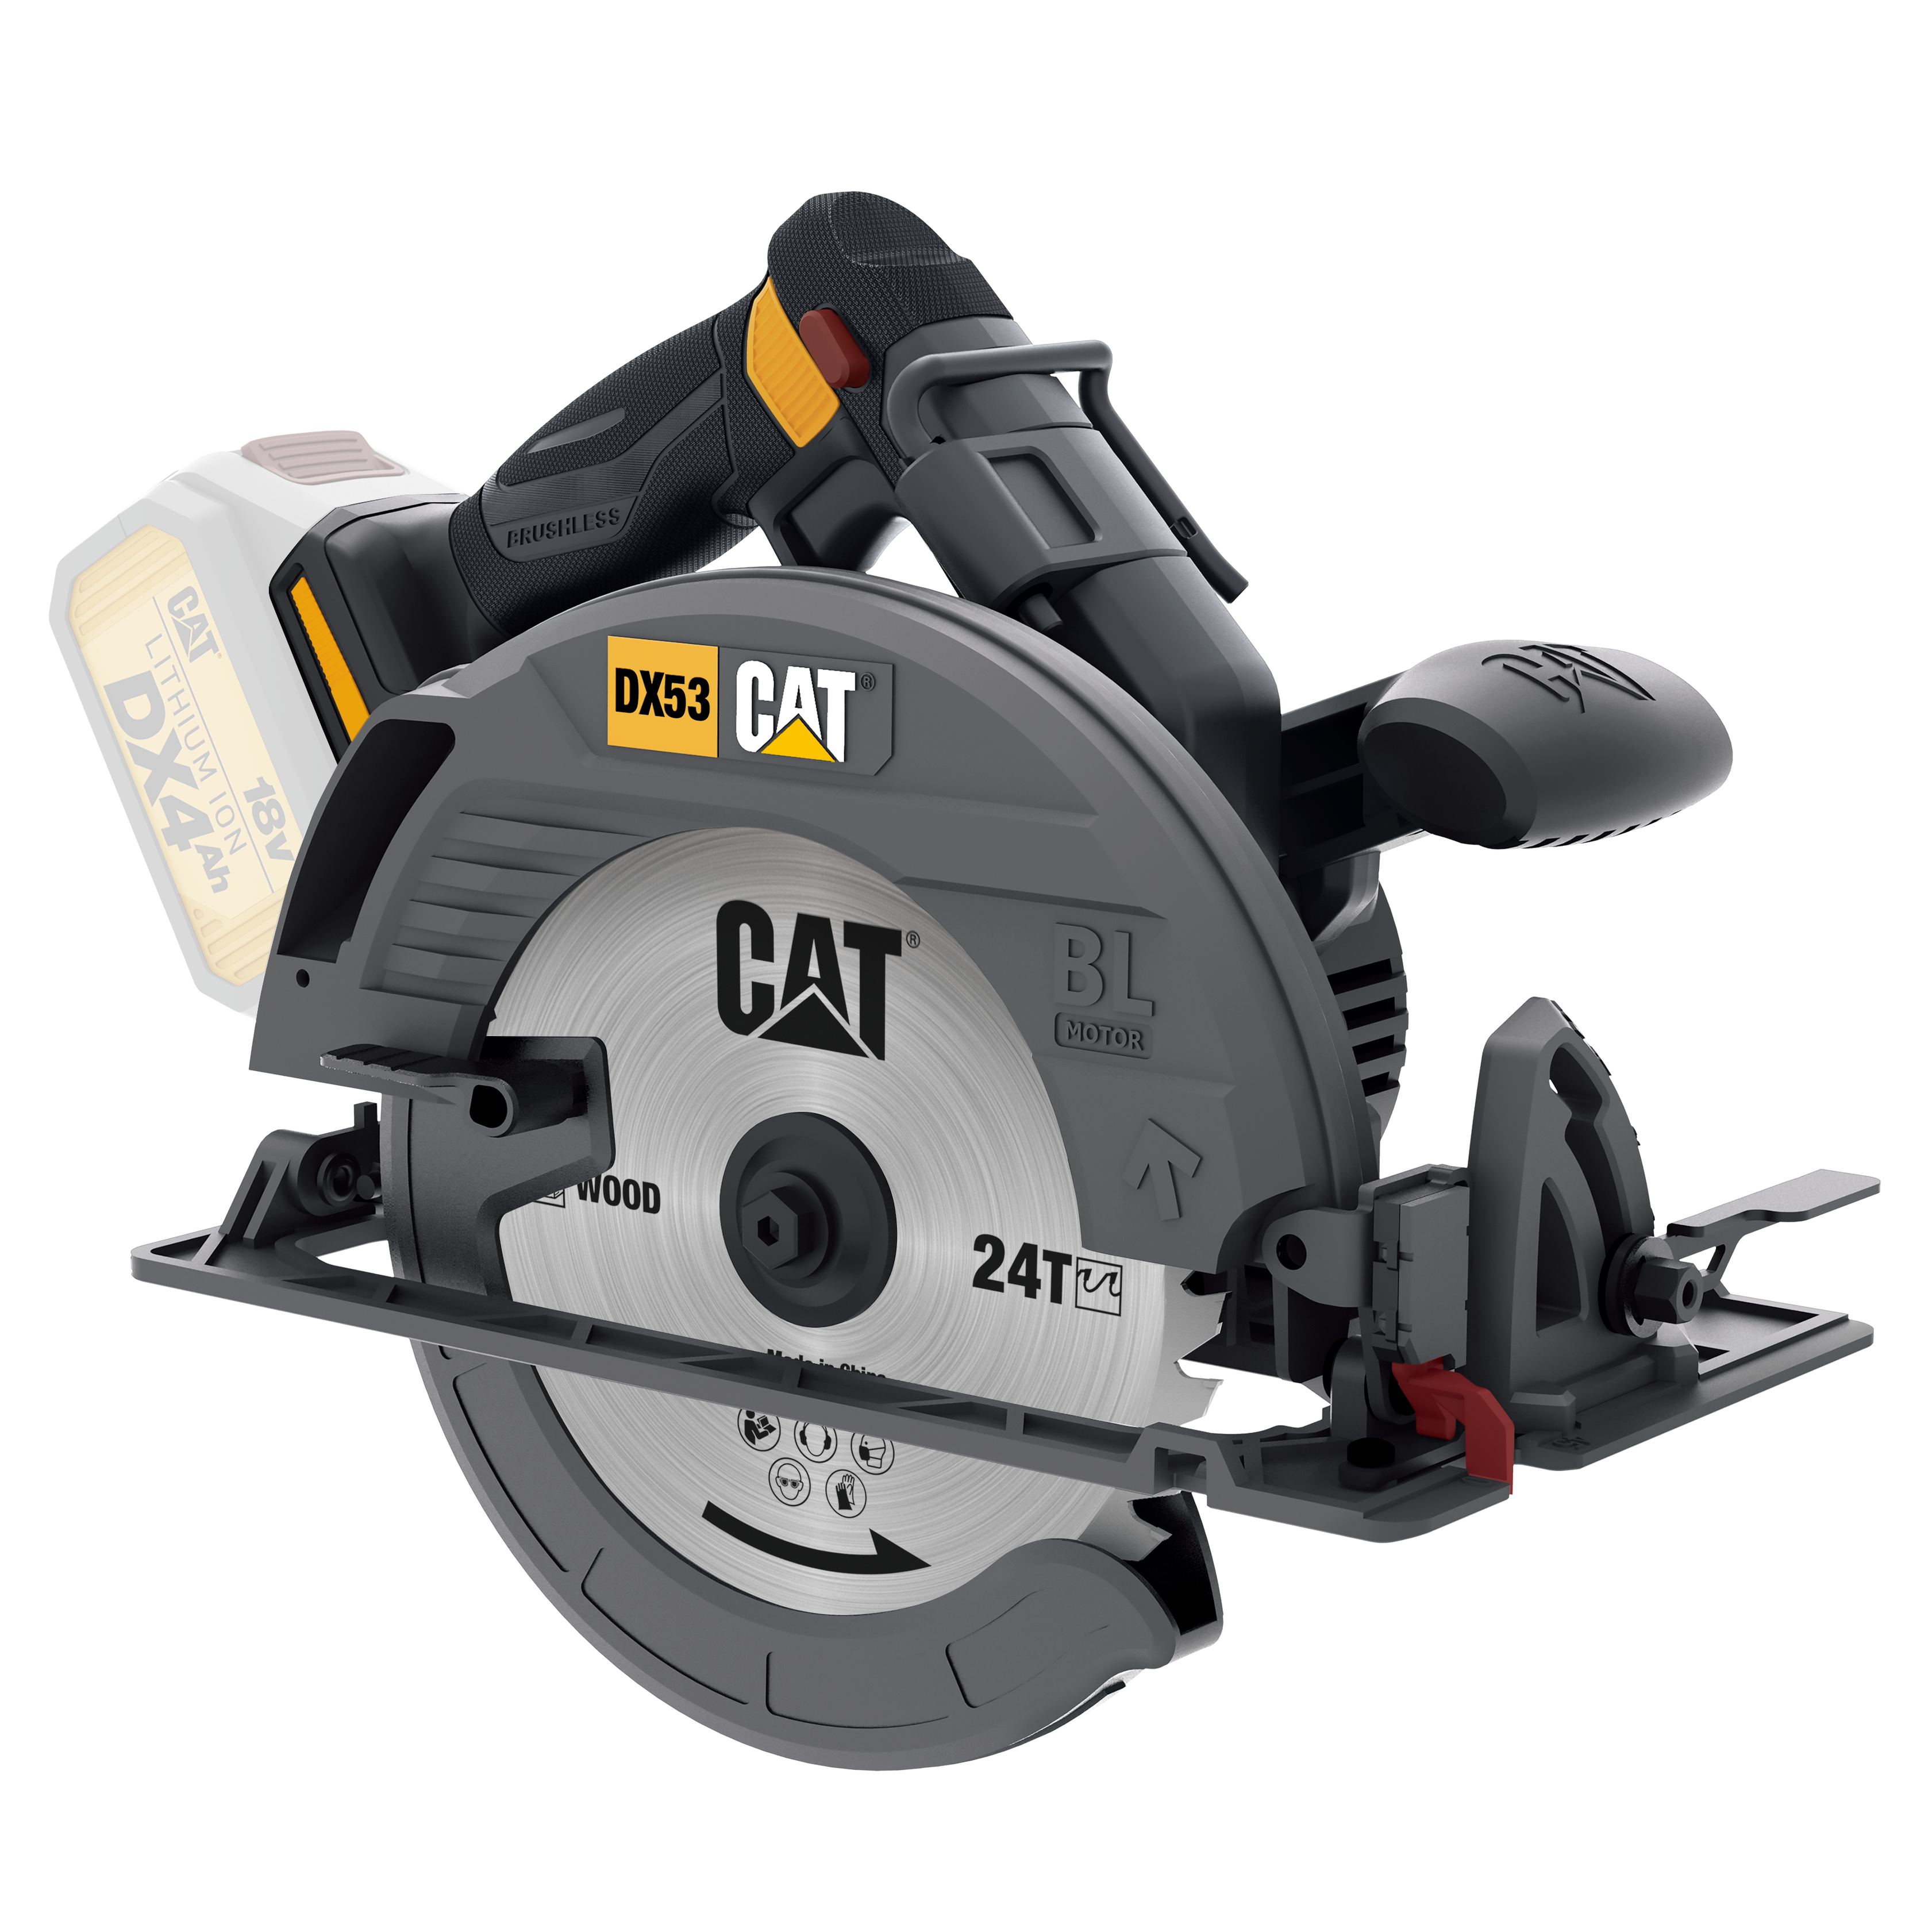 CAT DX53B 18V 185mm Circular Saw - Bare Unit